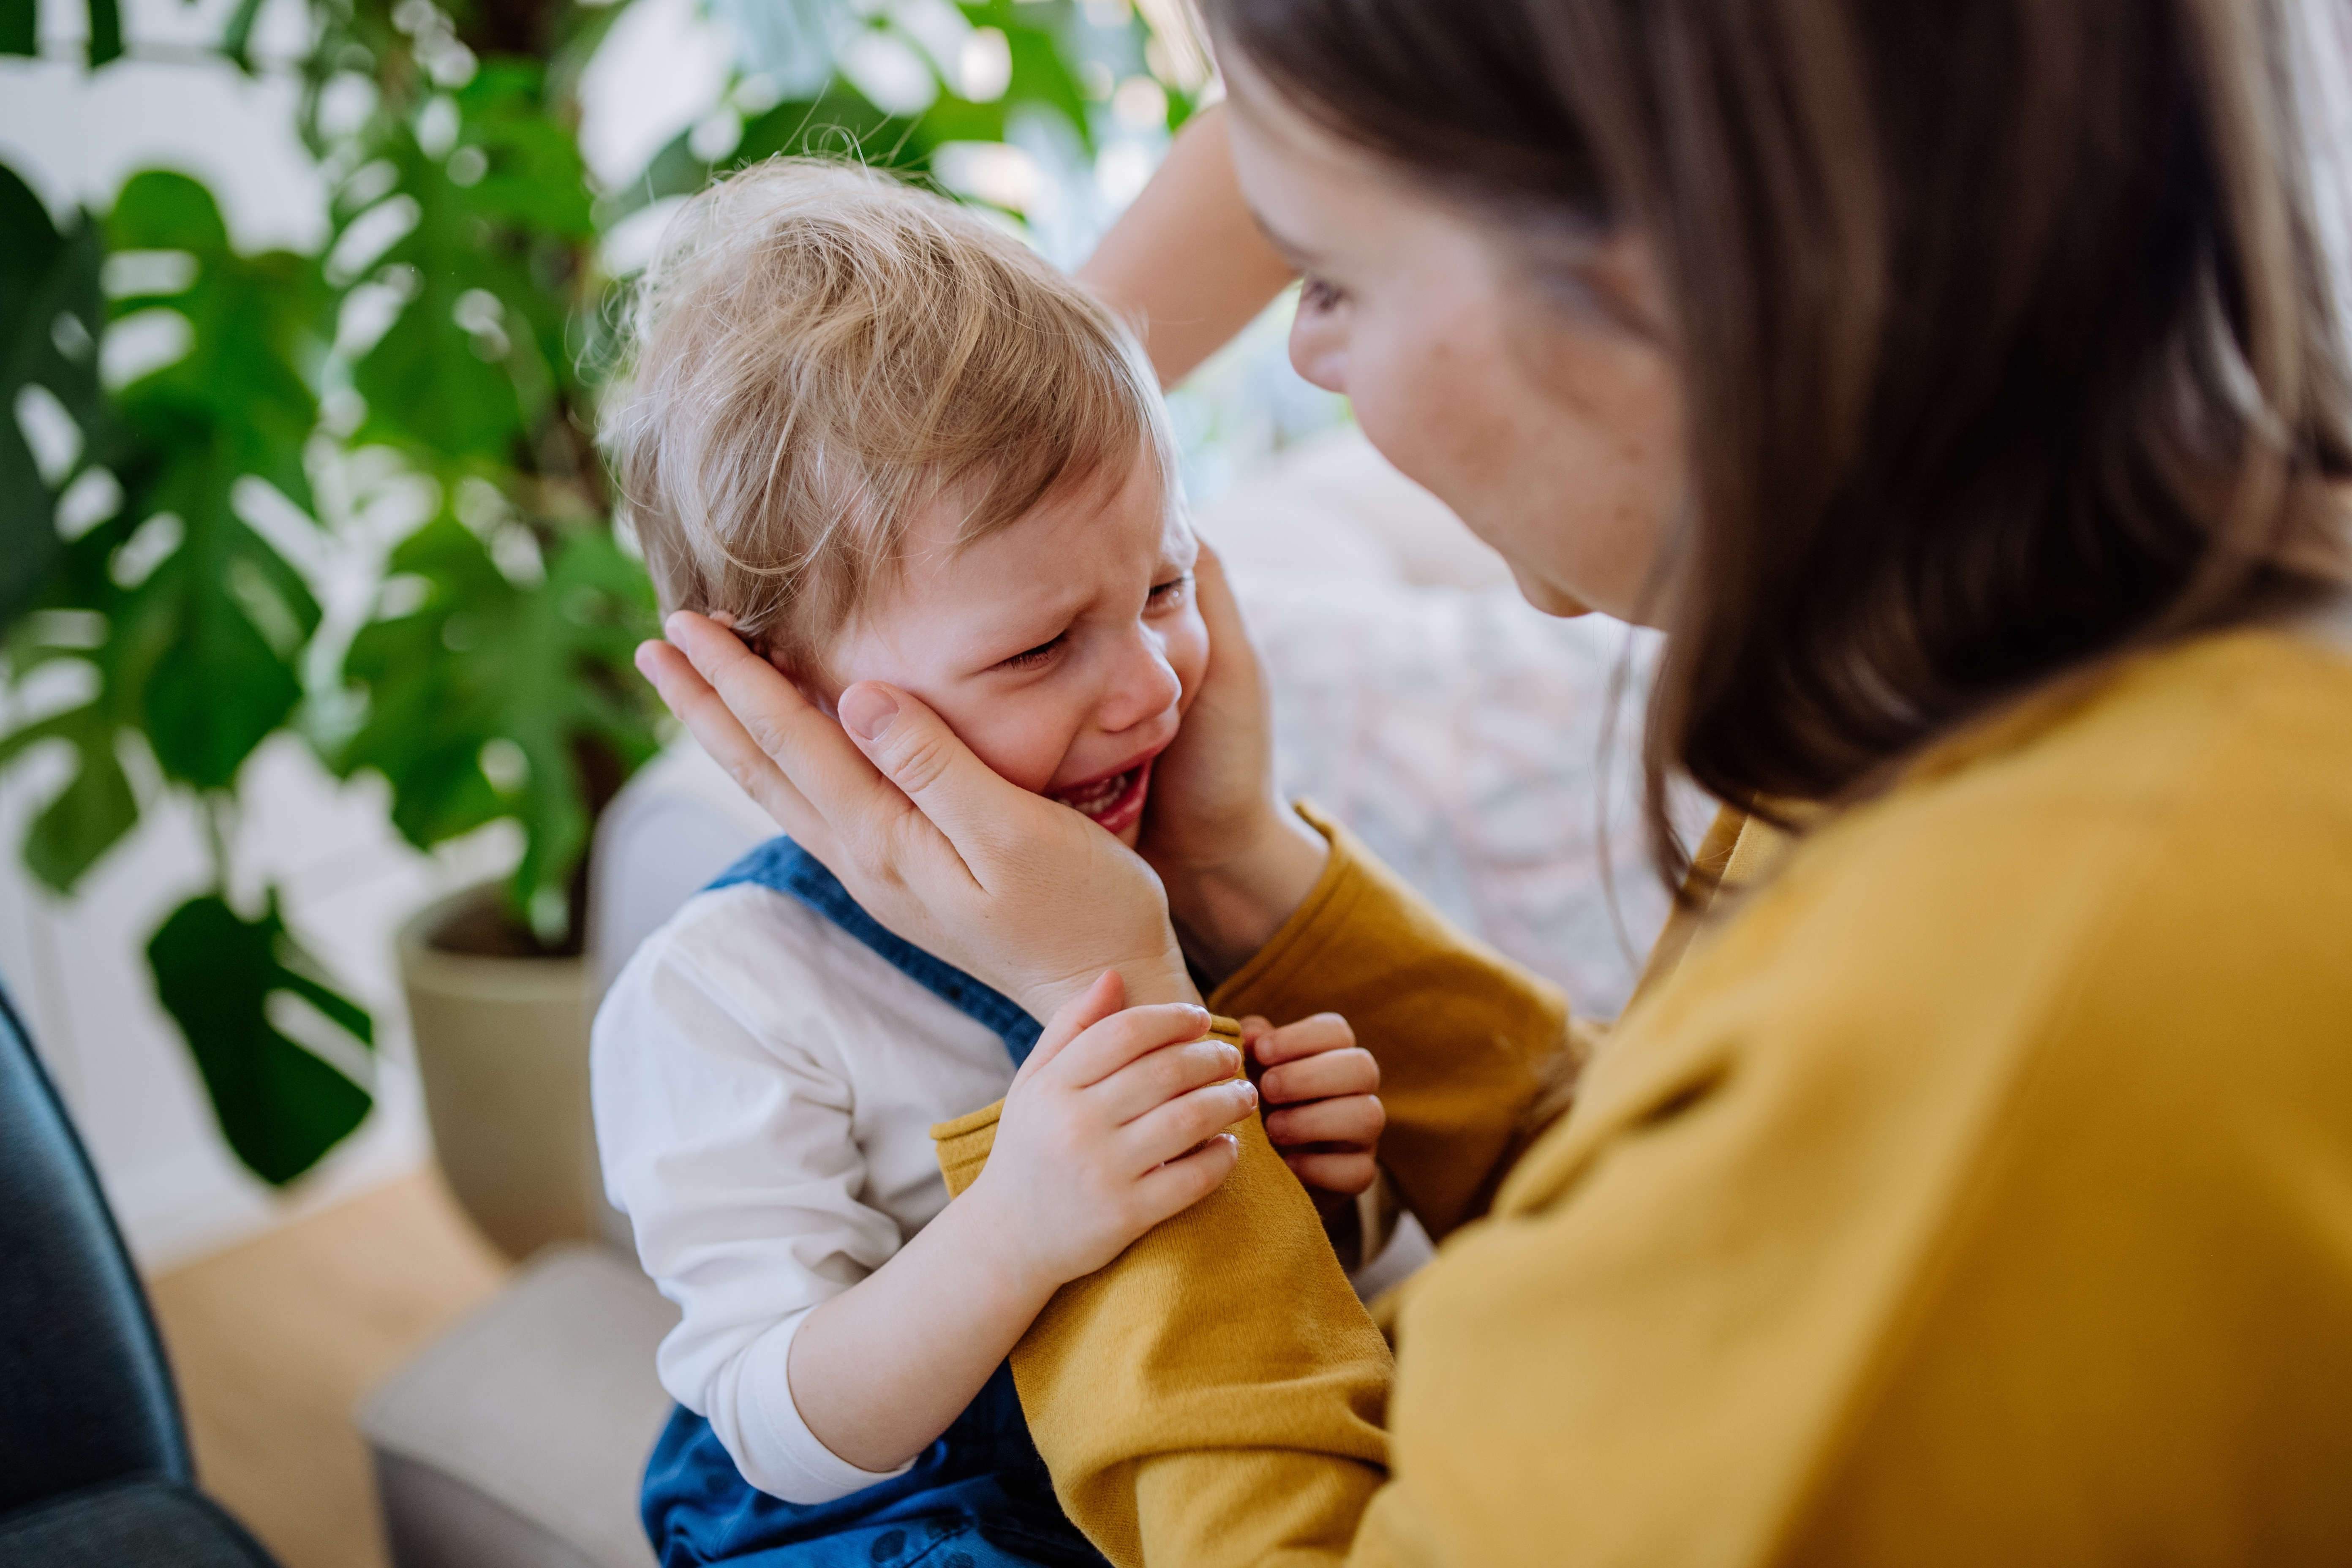 Una madre consolando a su hijo que llora | Fuente: Shutterstock